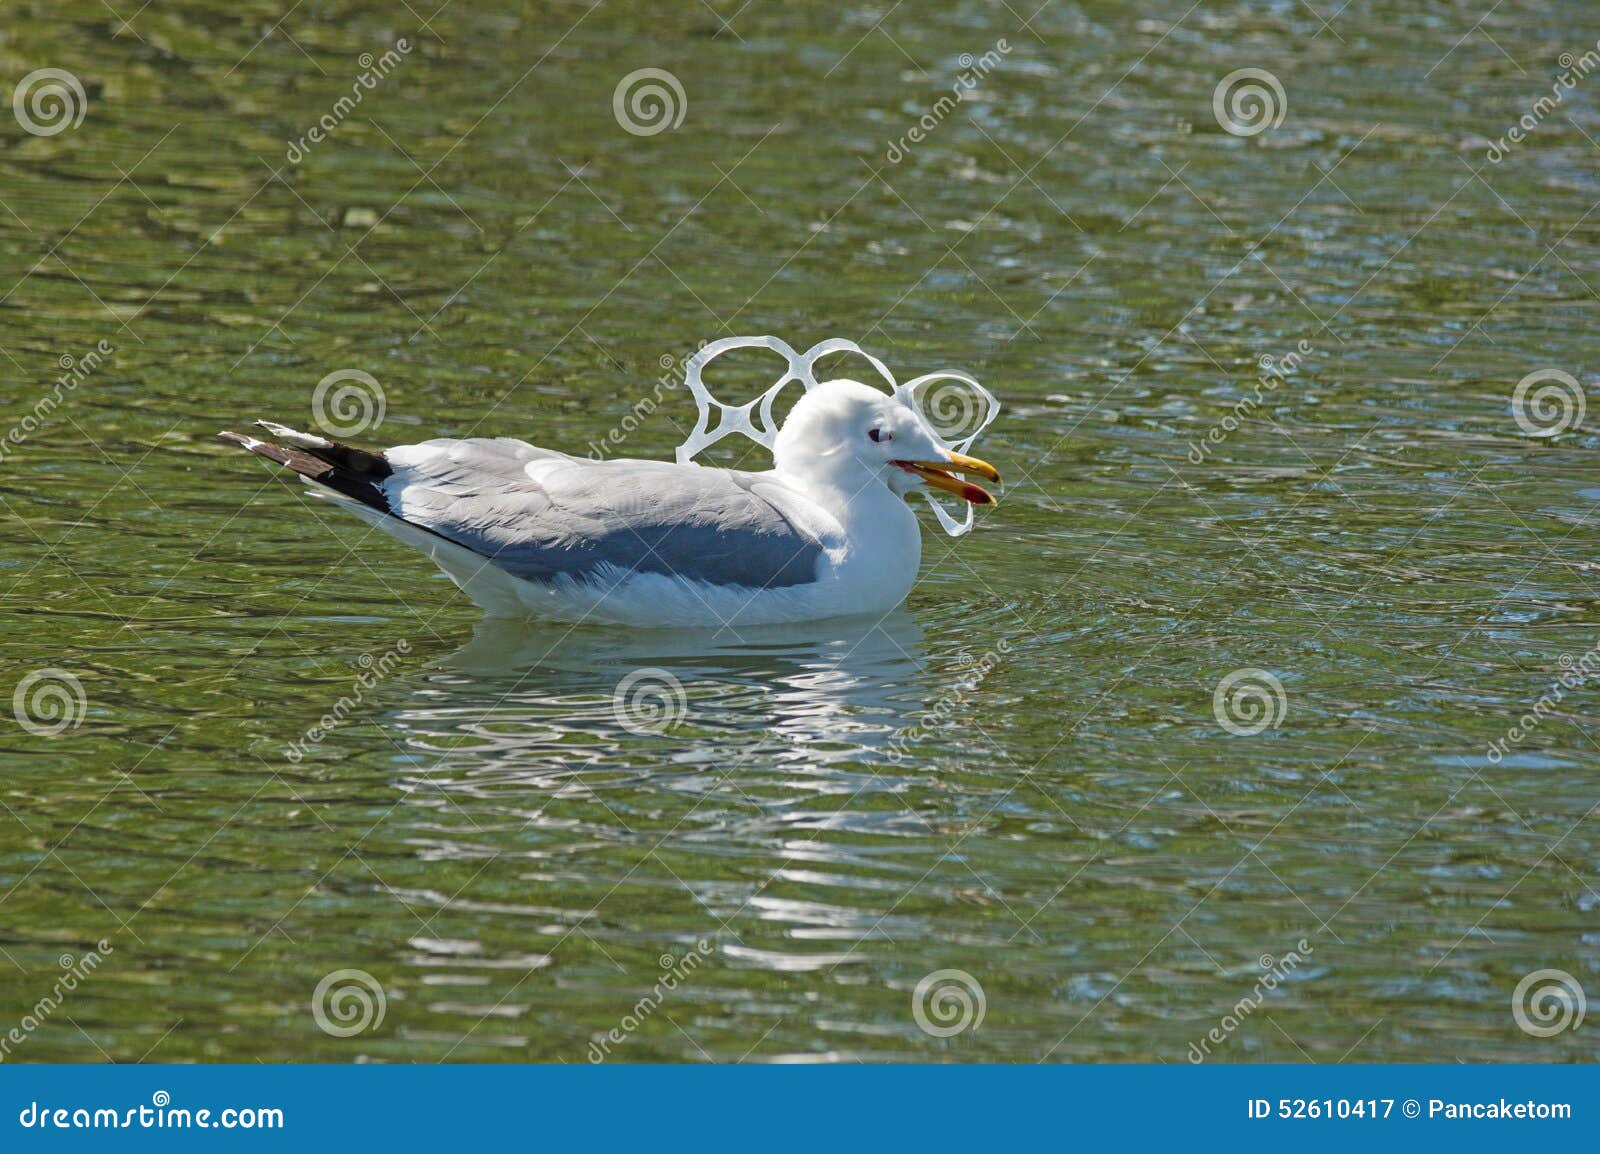 gull caught in plastic pollution